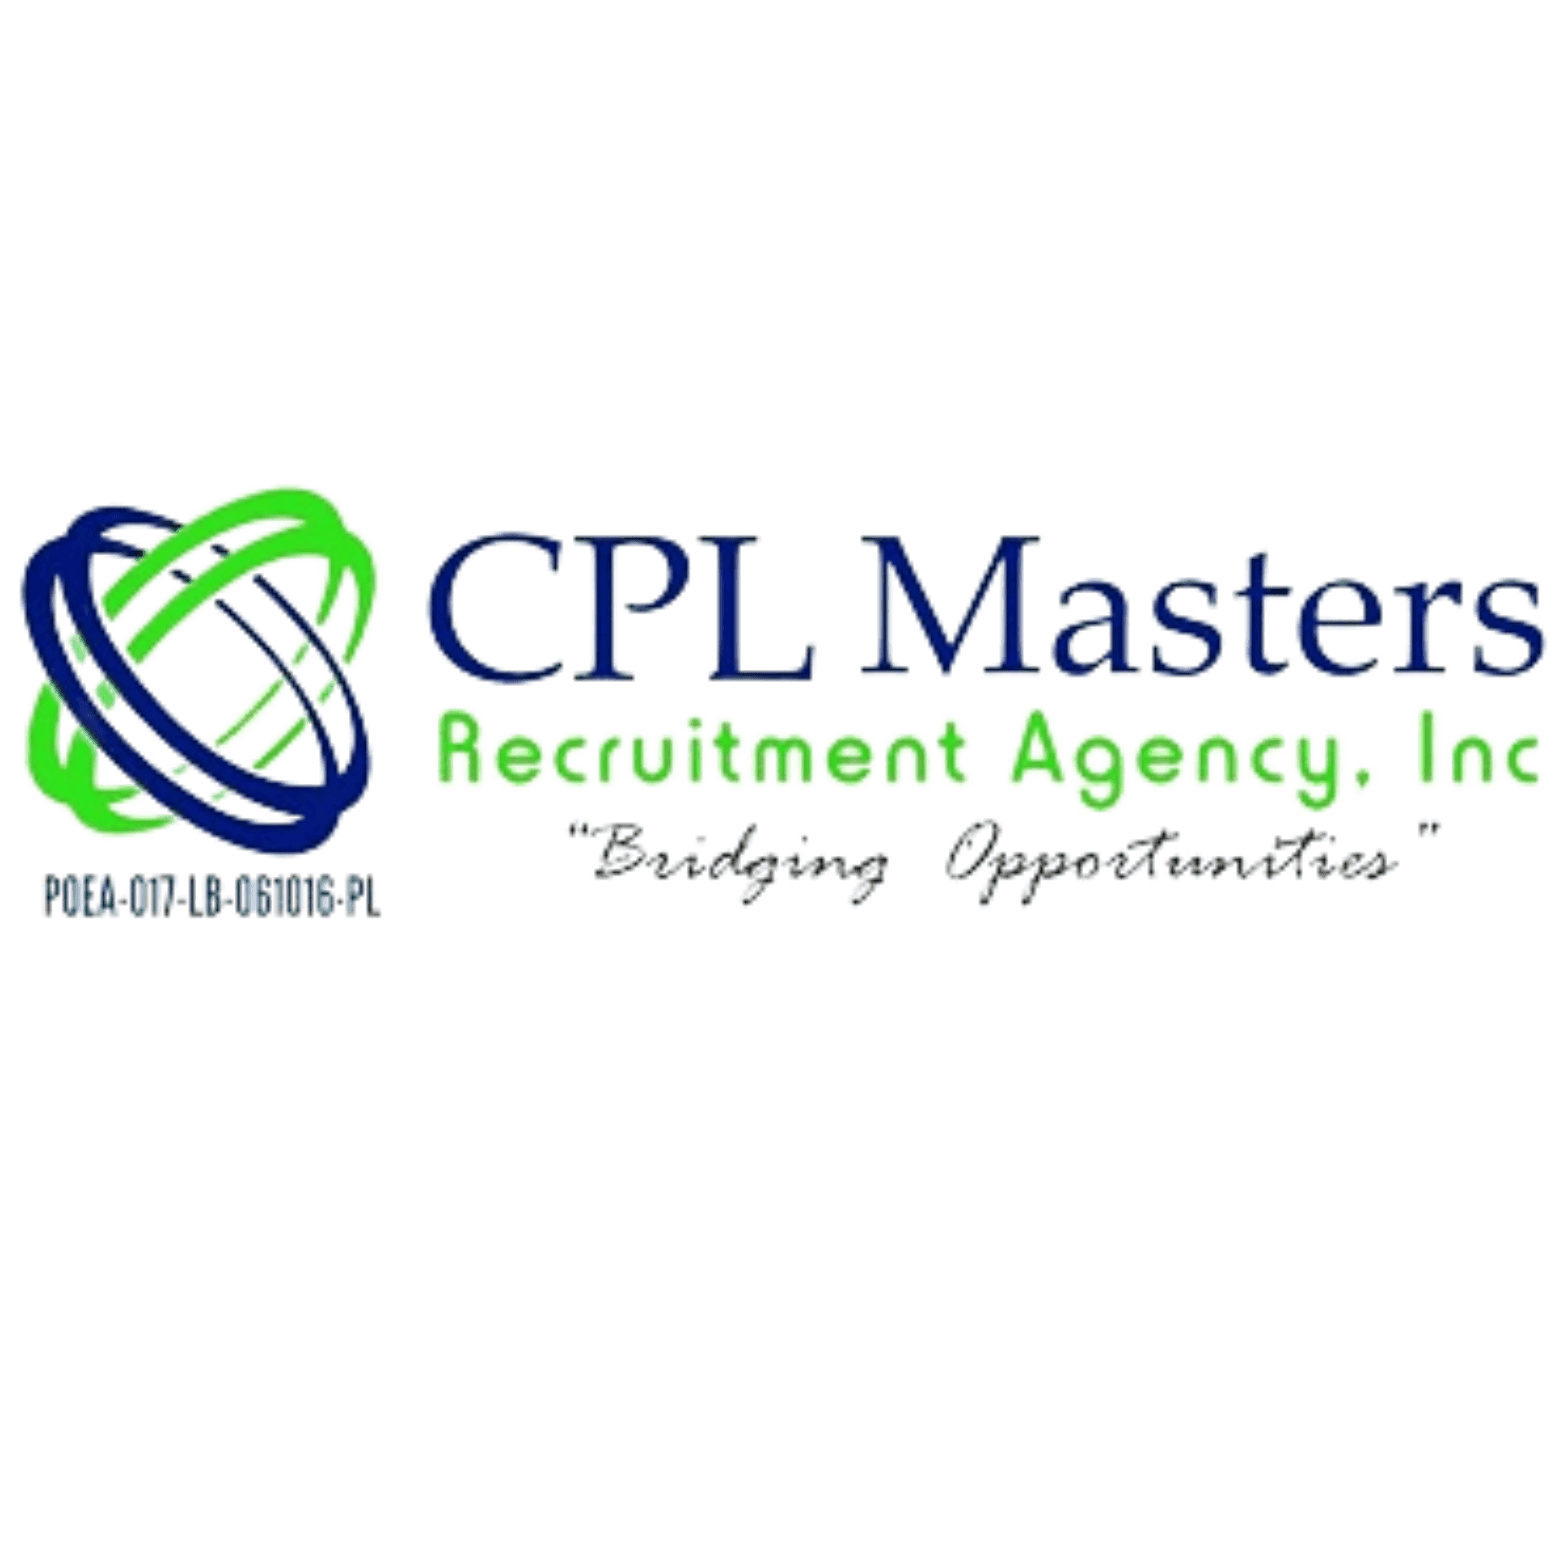 CPL Logo